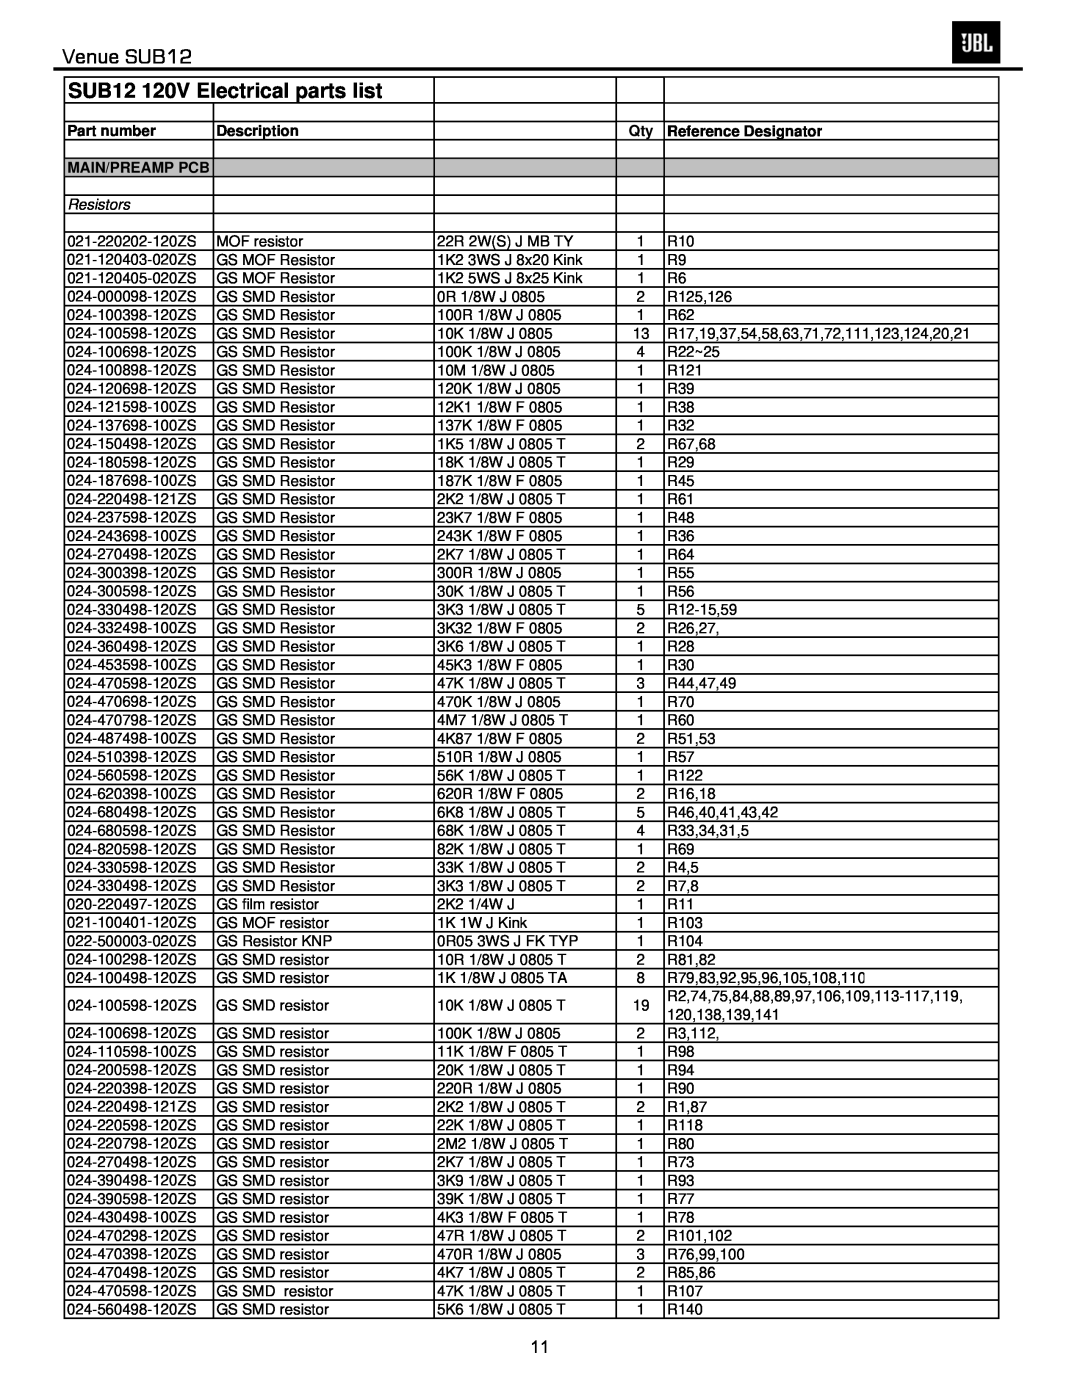 JBL Venue SUB12, SUB12 120V Electrical parts list, Part number, Description, Reference Designator, Main/Preamp Pcb 